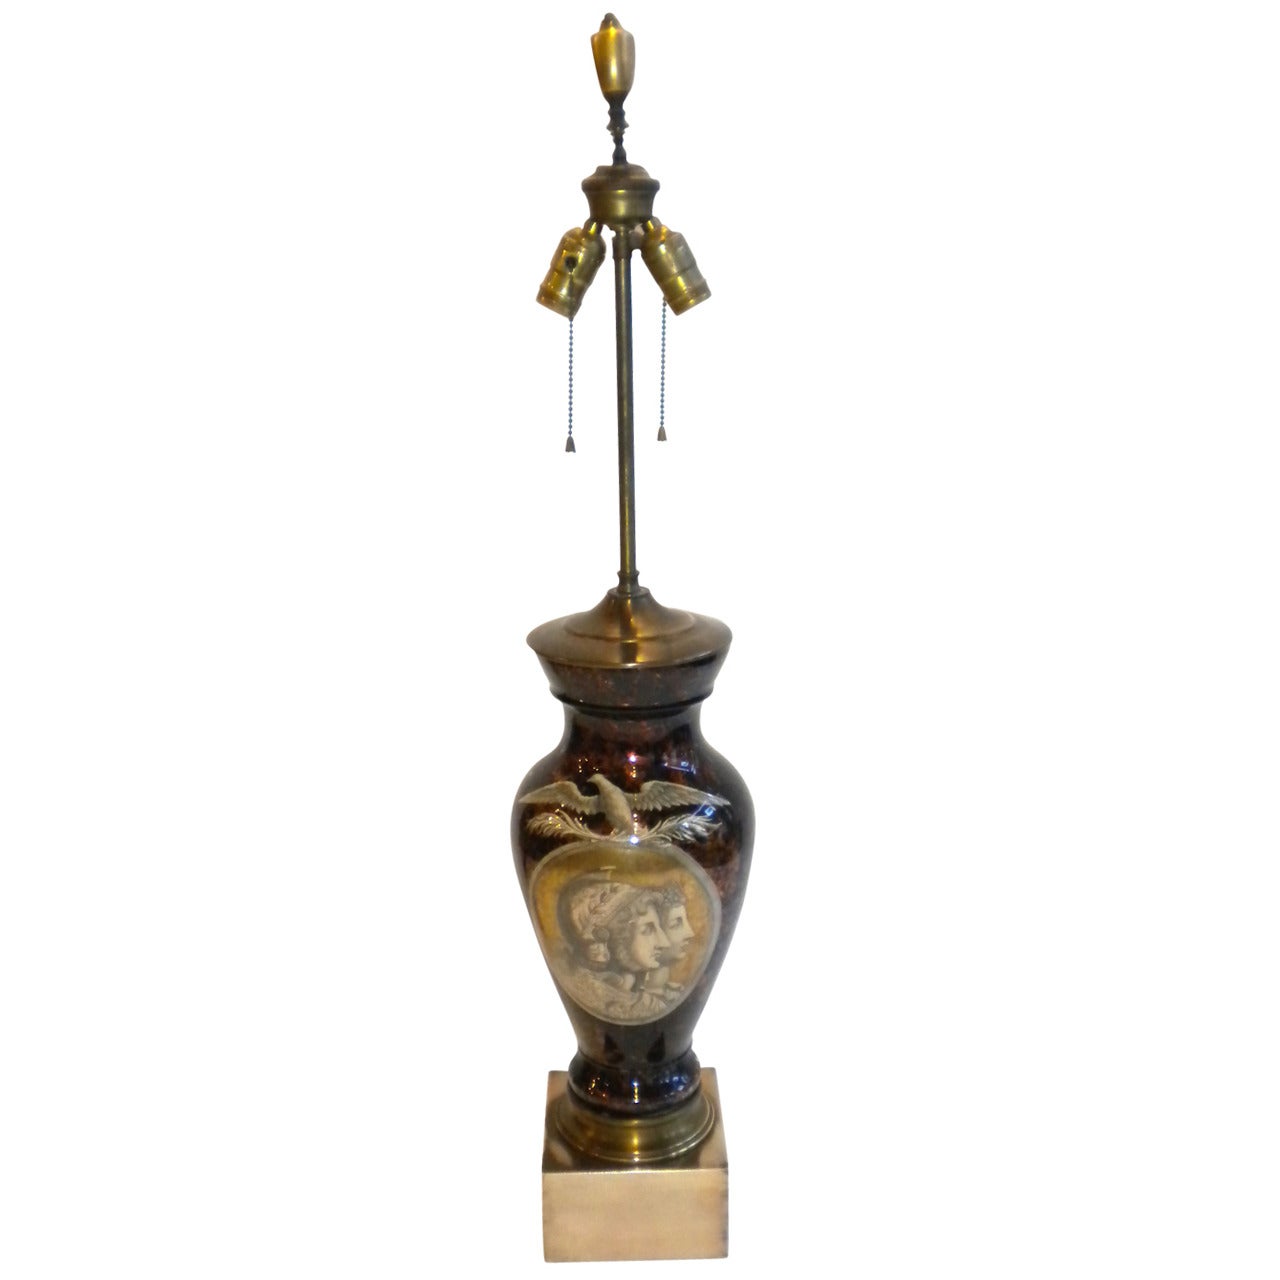 Neoclassical Églomisé Lamp